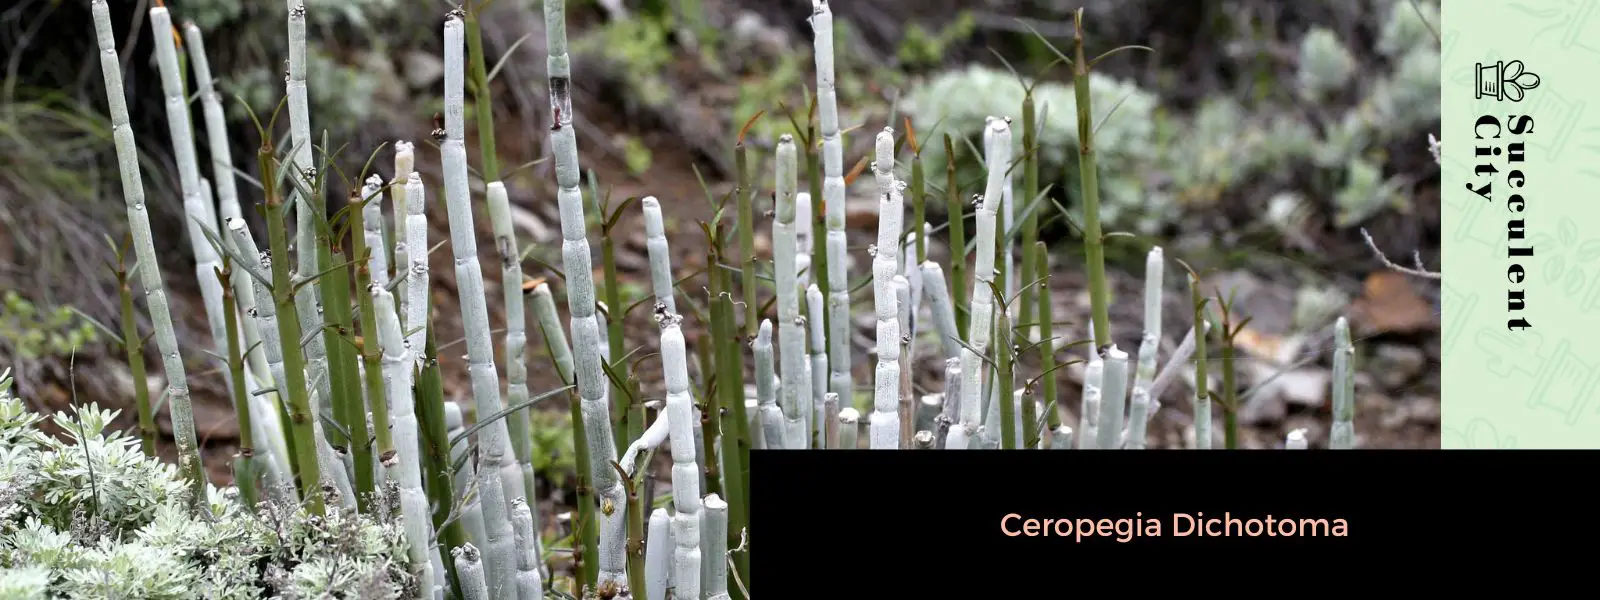 Ceropegia Dichotoma (La Planta “Cardoncillo”)